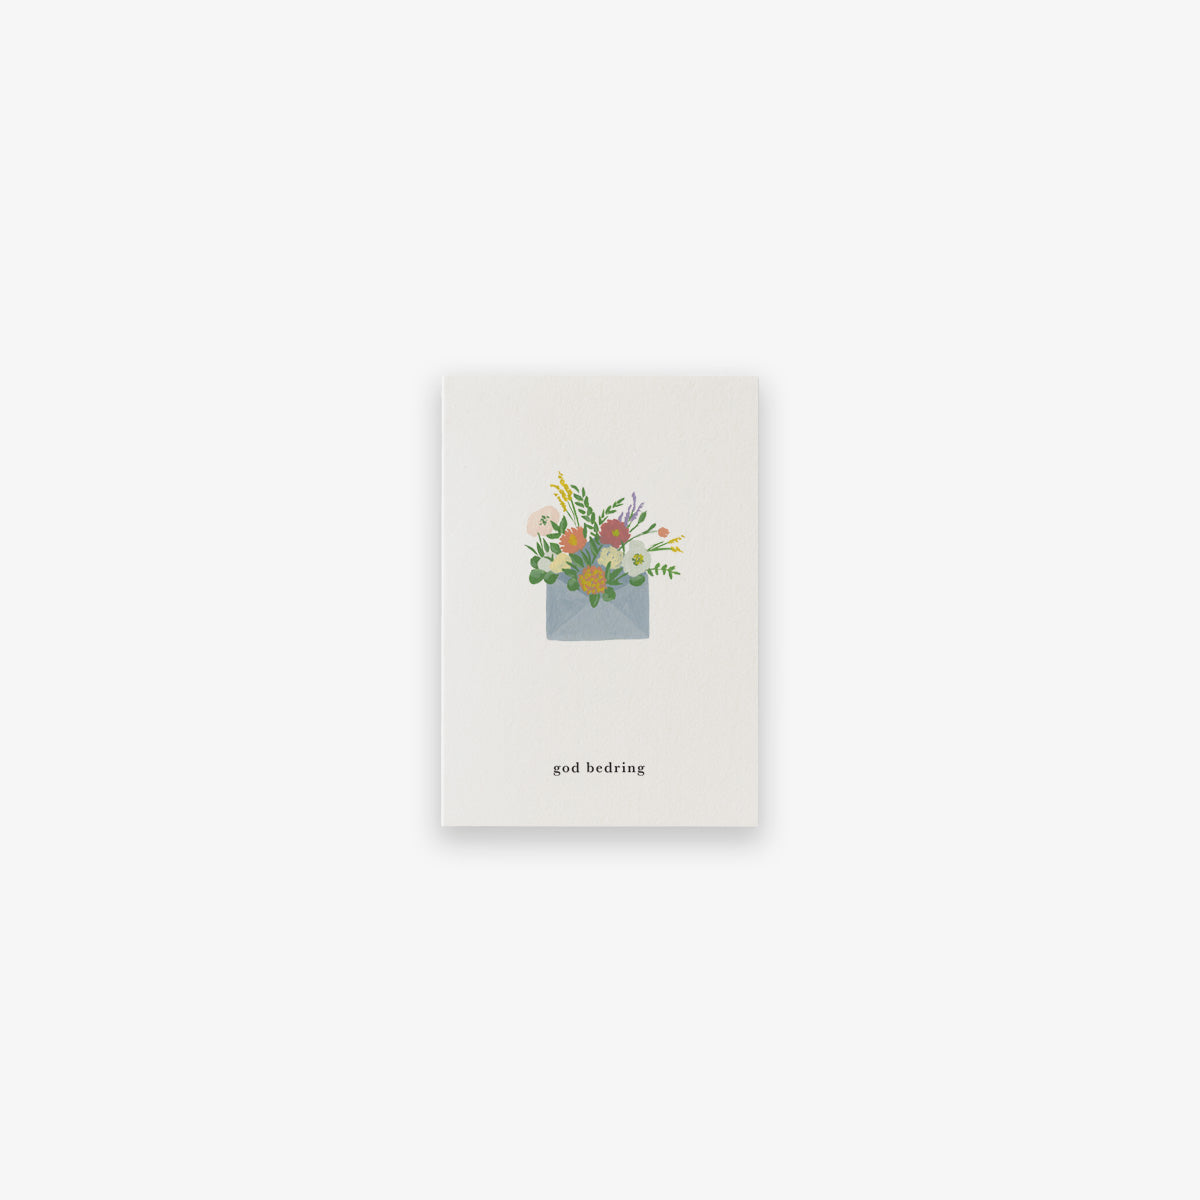 SMALL GREETING CARD // BLOMSTERKUVERT II (DANISH)